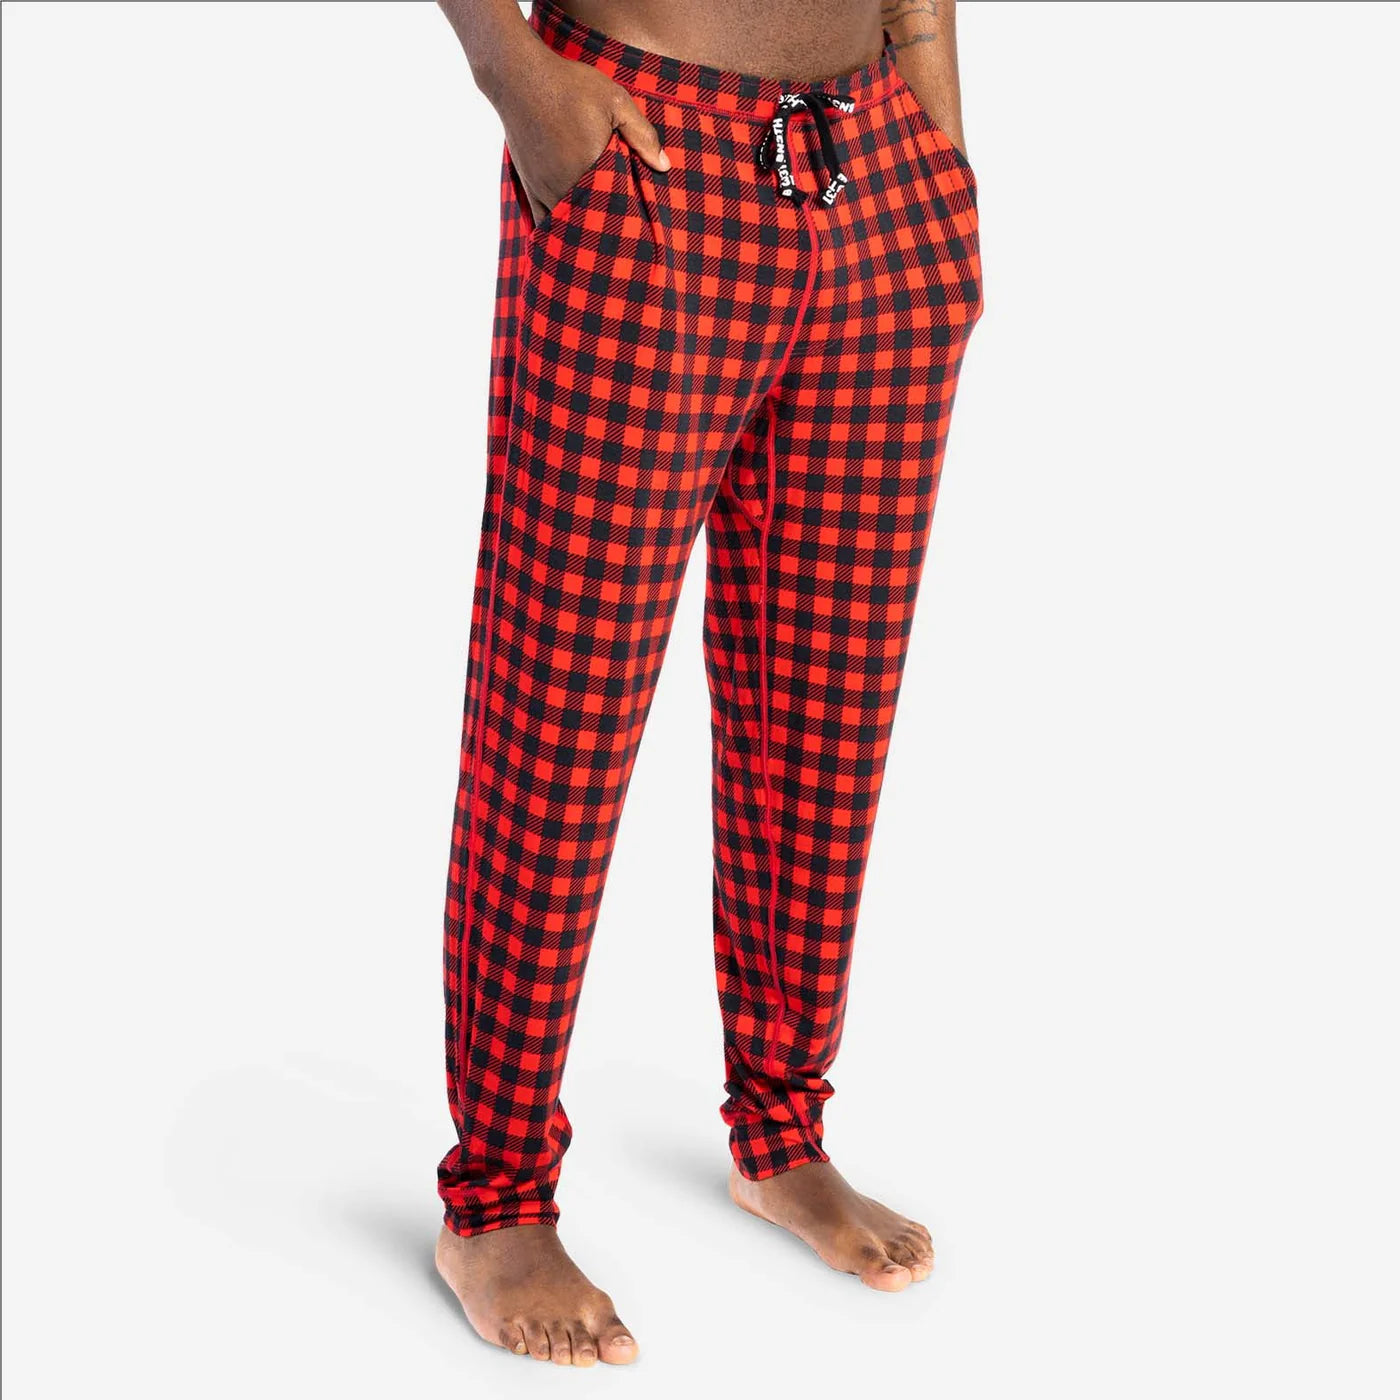 FW23-Sleepwear-Long-Buffalo-Check-Red-M611002-1164-Front_e1098887-52b7-4c42-abbb-b5b6c6ef7184.webp